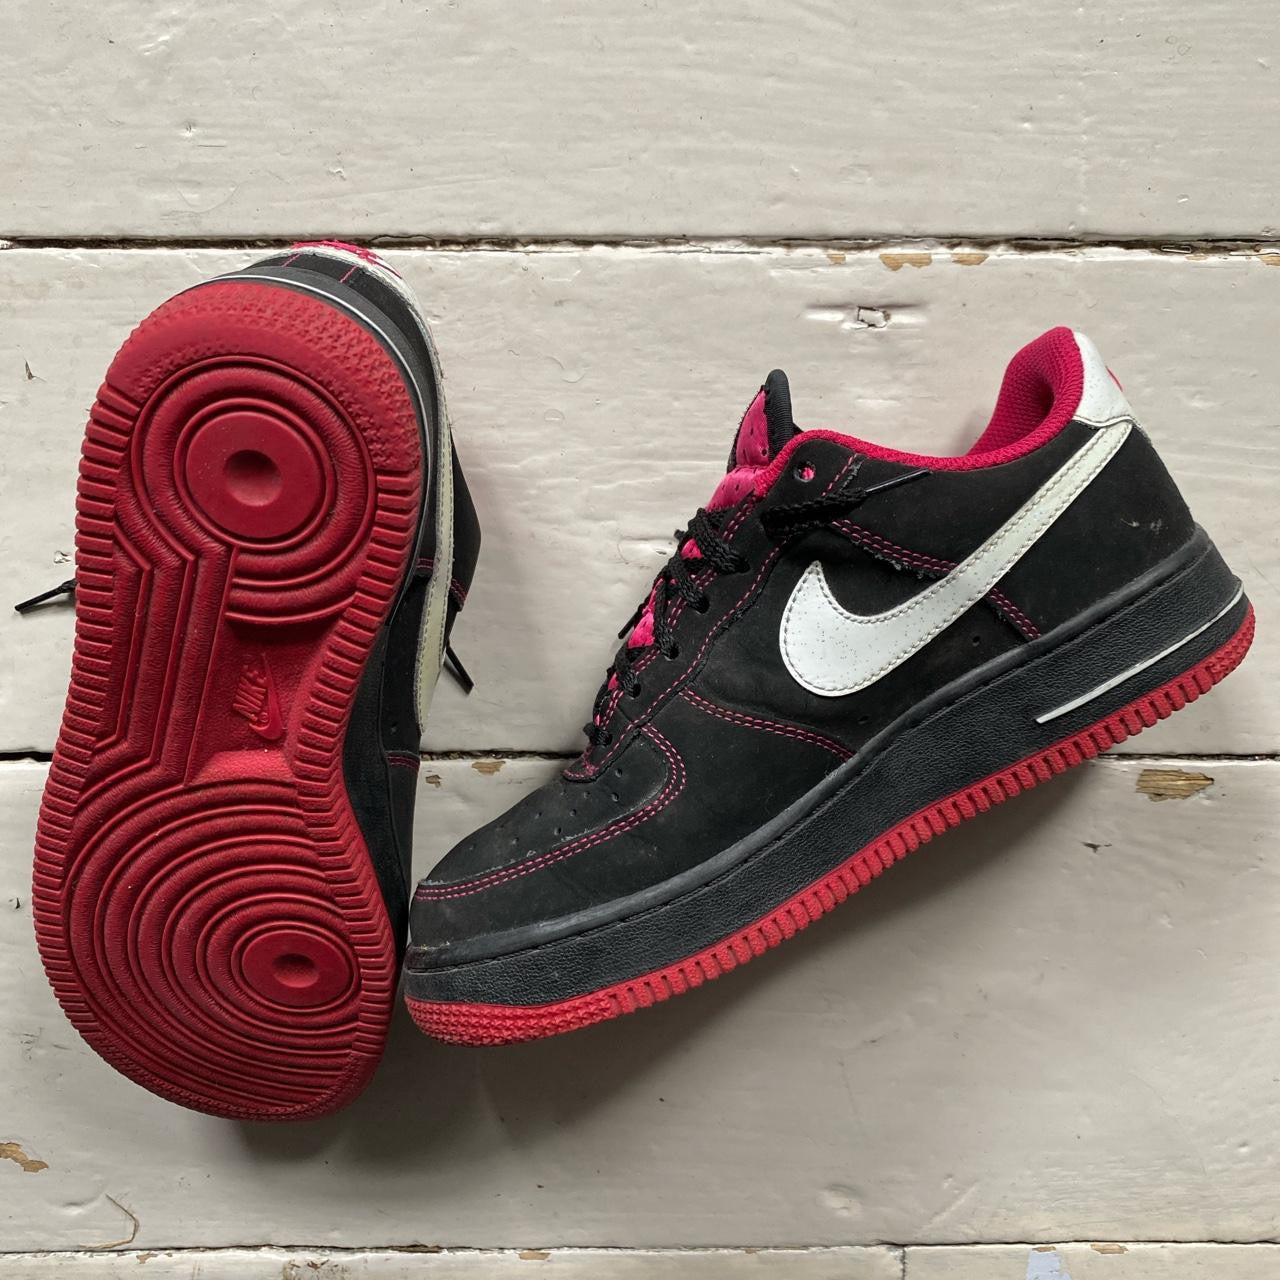 Nike Air Force 1 Black and Pink (UK 4)